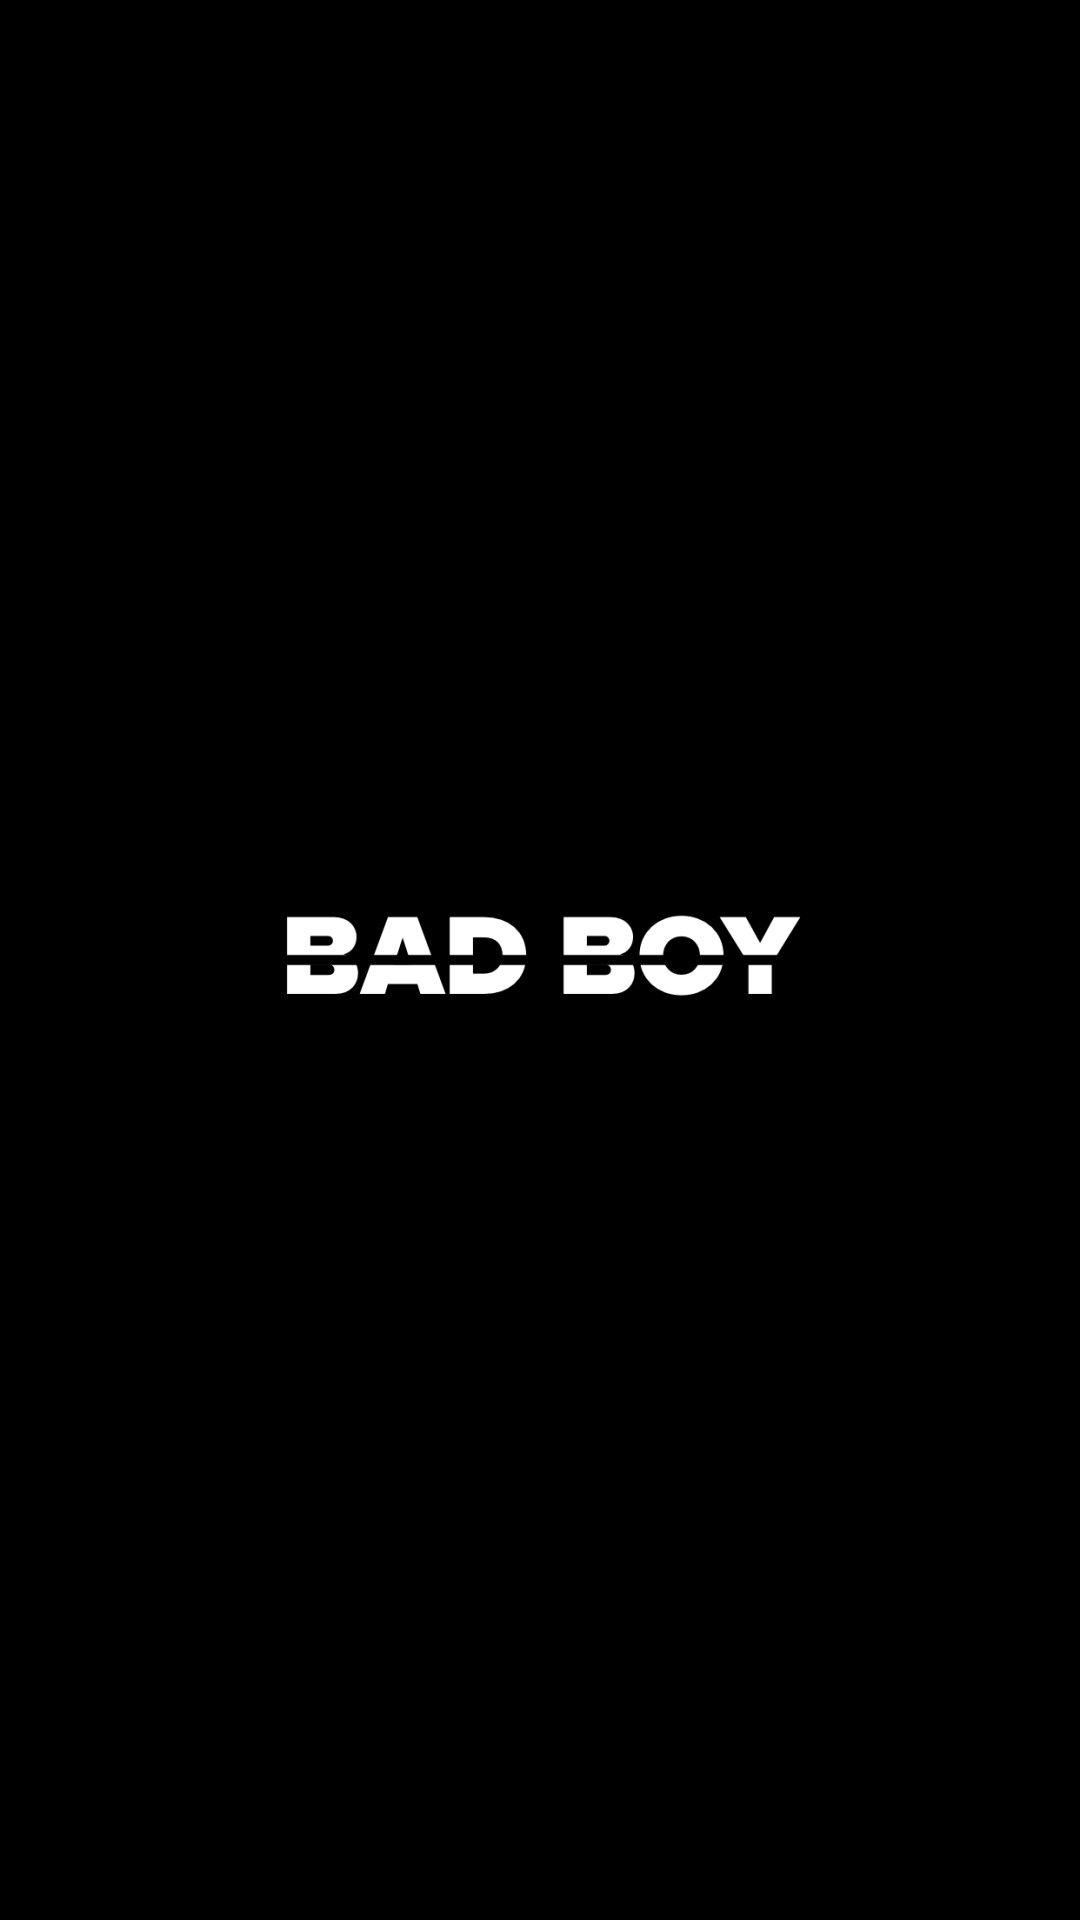 Bad Boy DP for Whatsapp, Status Images